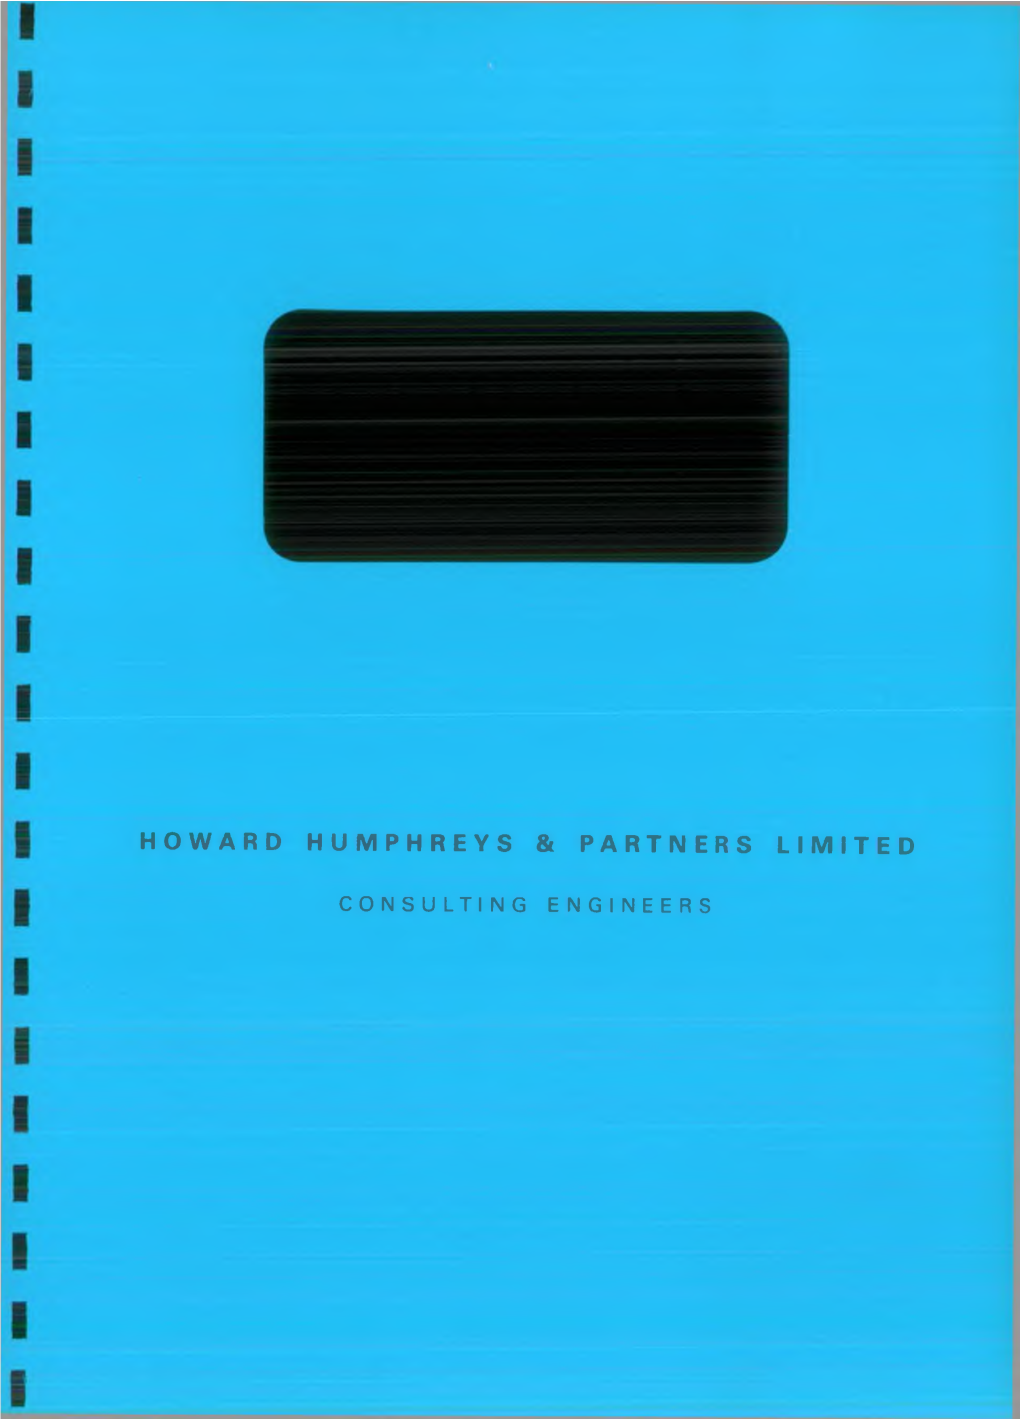 Howard Humphreys & Partners Limited